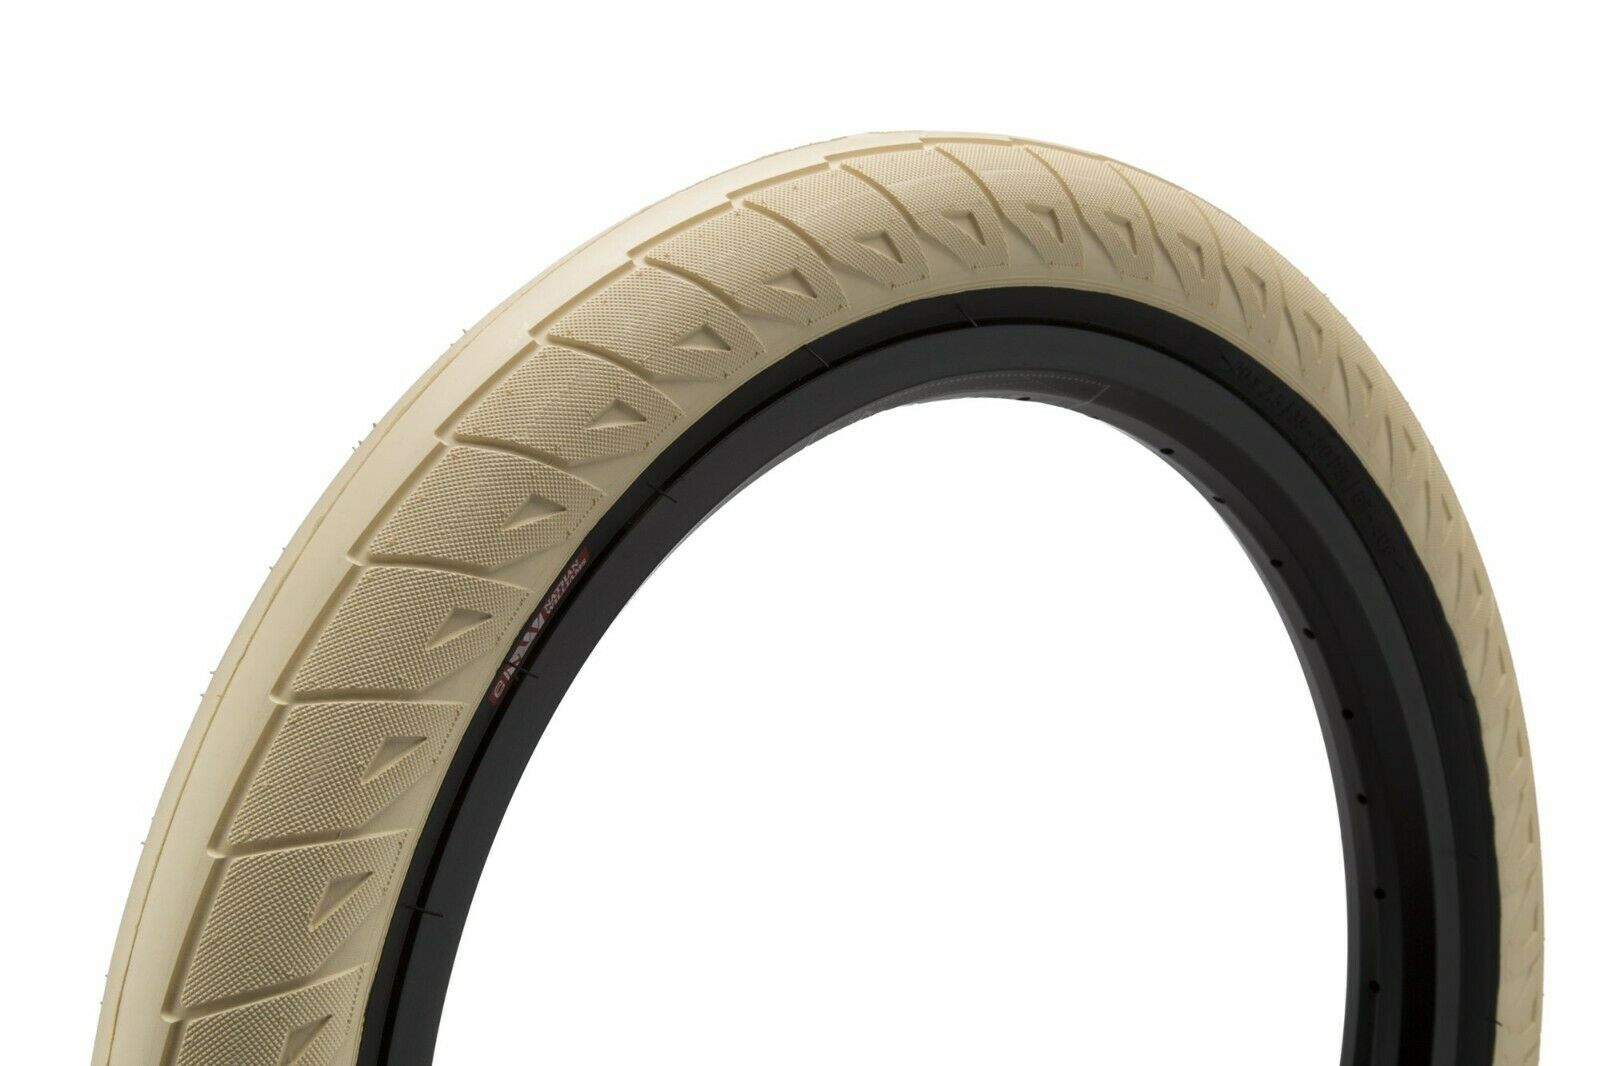 20x2.50 Cinema Williams BMX tire - Cream w/ Black Sidewall